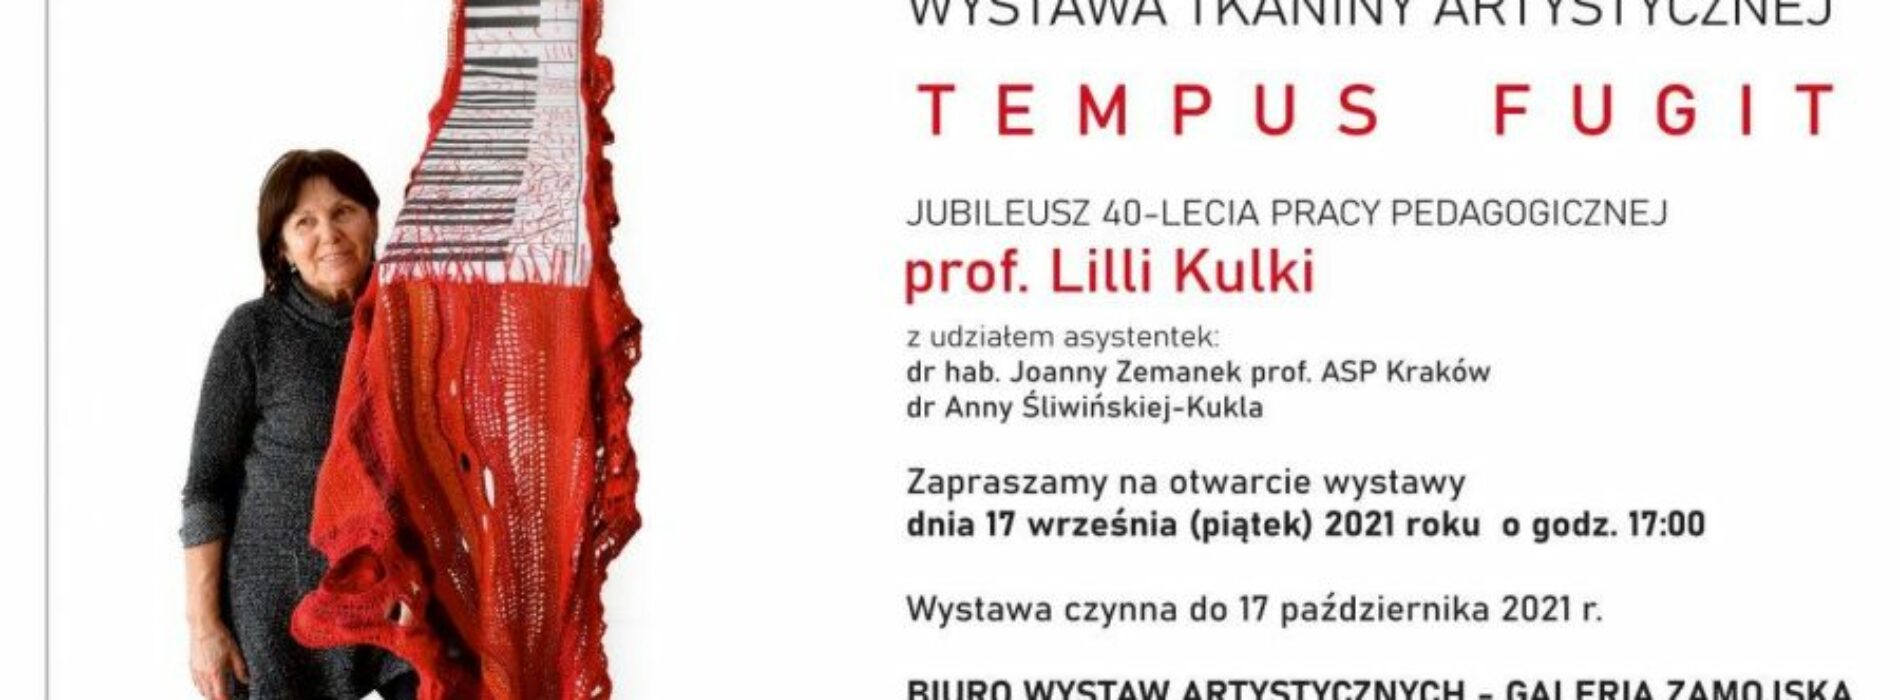 Wystawa „TEMPUS FUGIT” prof. Lilli Kulki